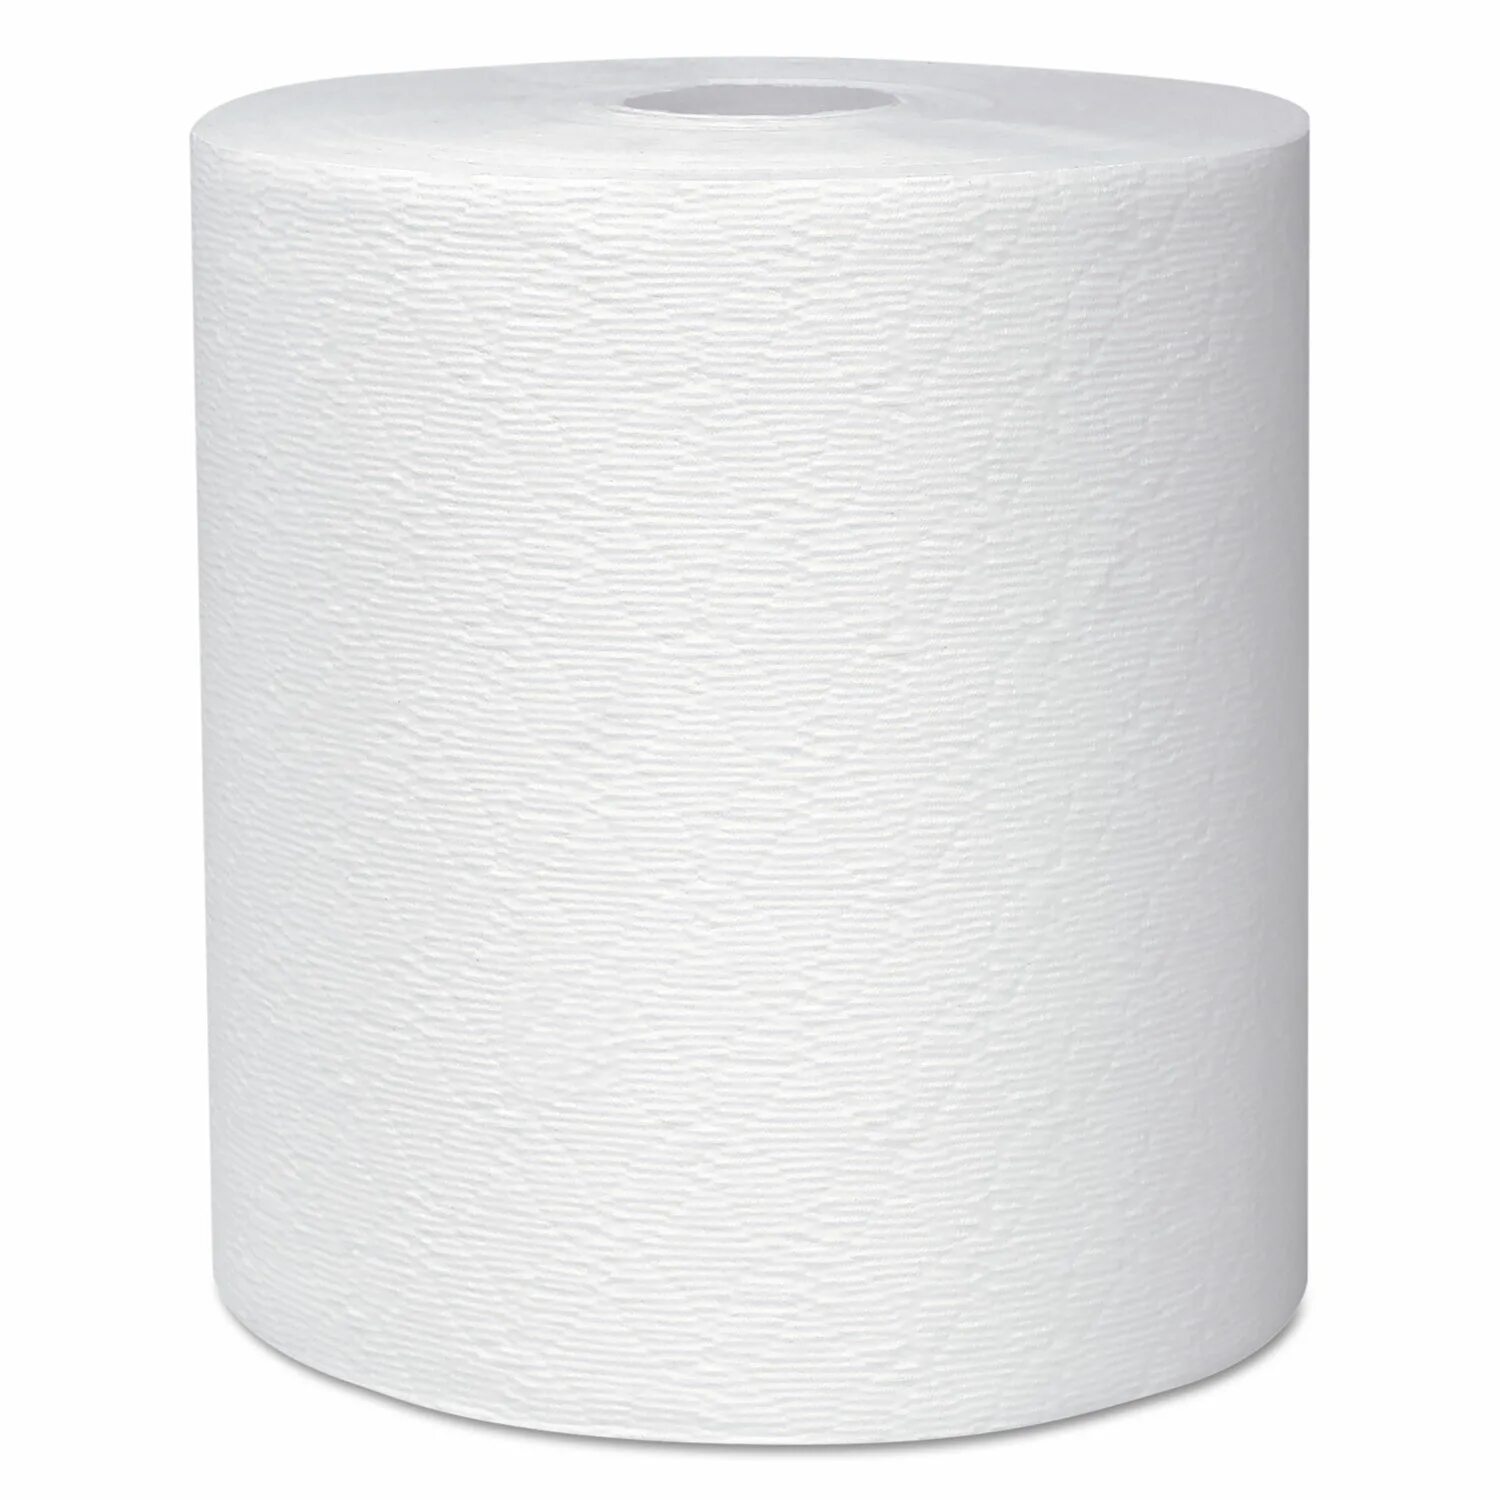 Салфетка Kimberly Clark марка: WYPALL l30, 7303 белые 300шт. Полотенца бумажные Lime Mini c центральной вытяжкой серые однослойные 265120. Полотенца бумажные (2 рулона/уп). Текстура бумажного полотенца.